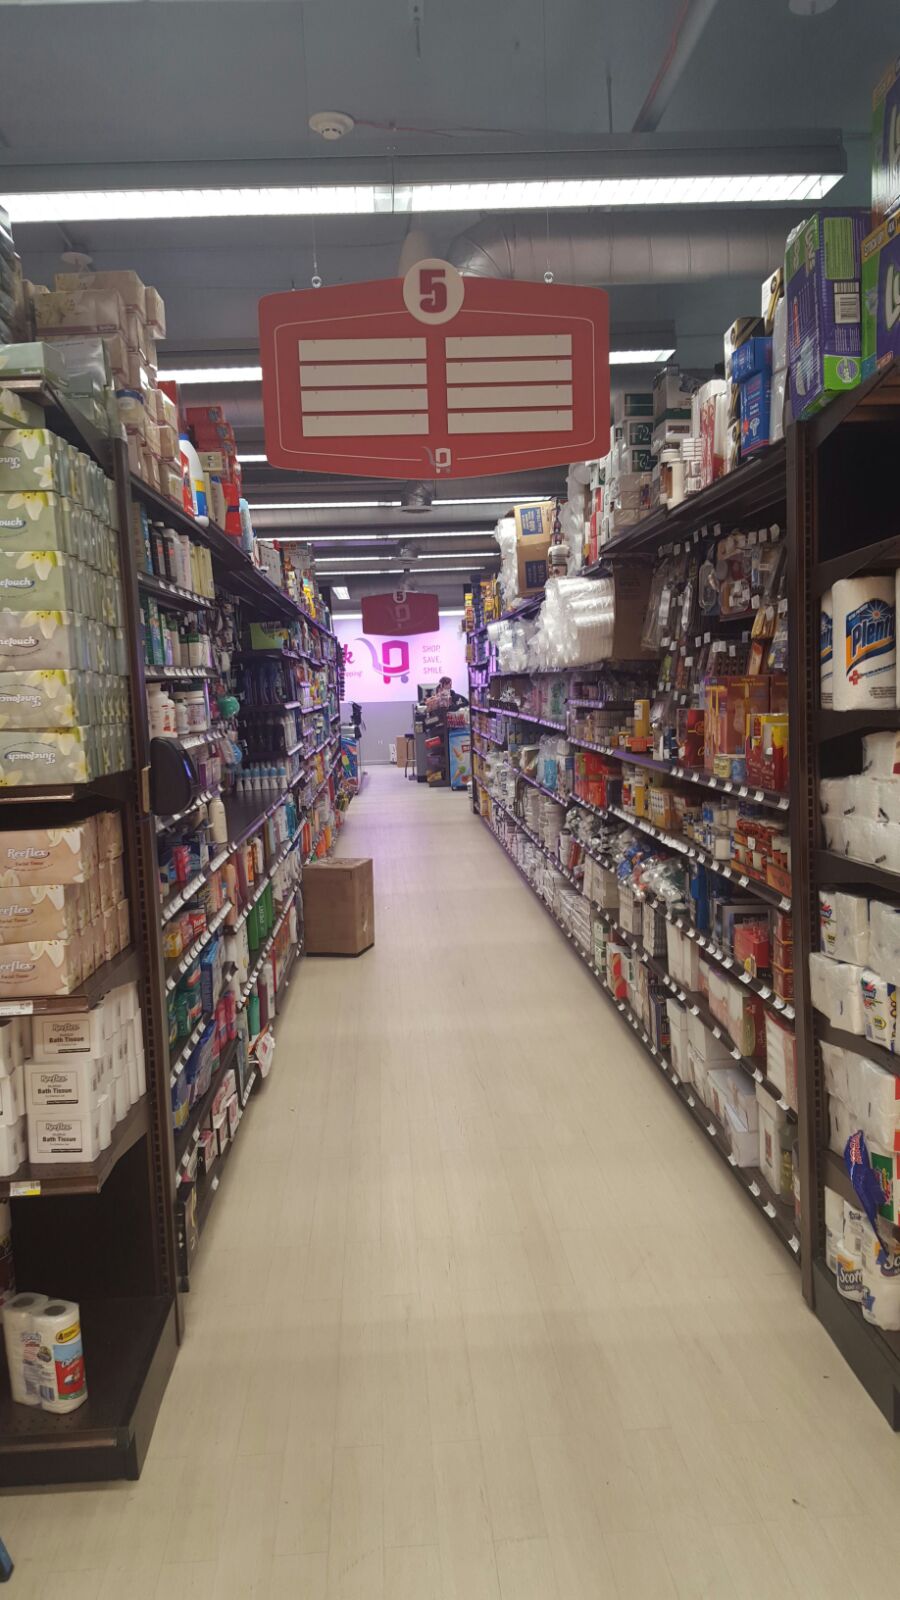 Peppermint Supermarket | 33 Dinev Road #003, Kiryas Joel, NY 10950 | Phone: (845) 492-8777